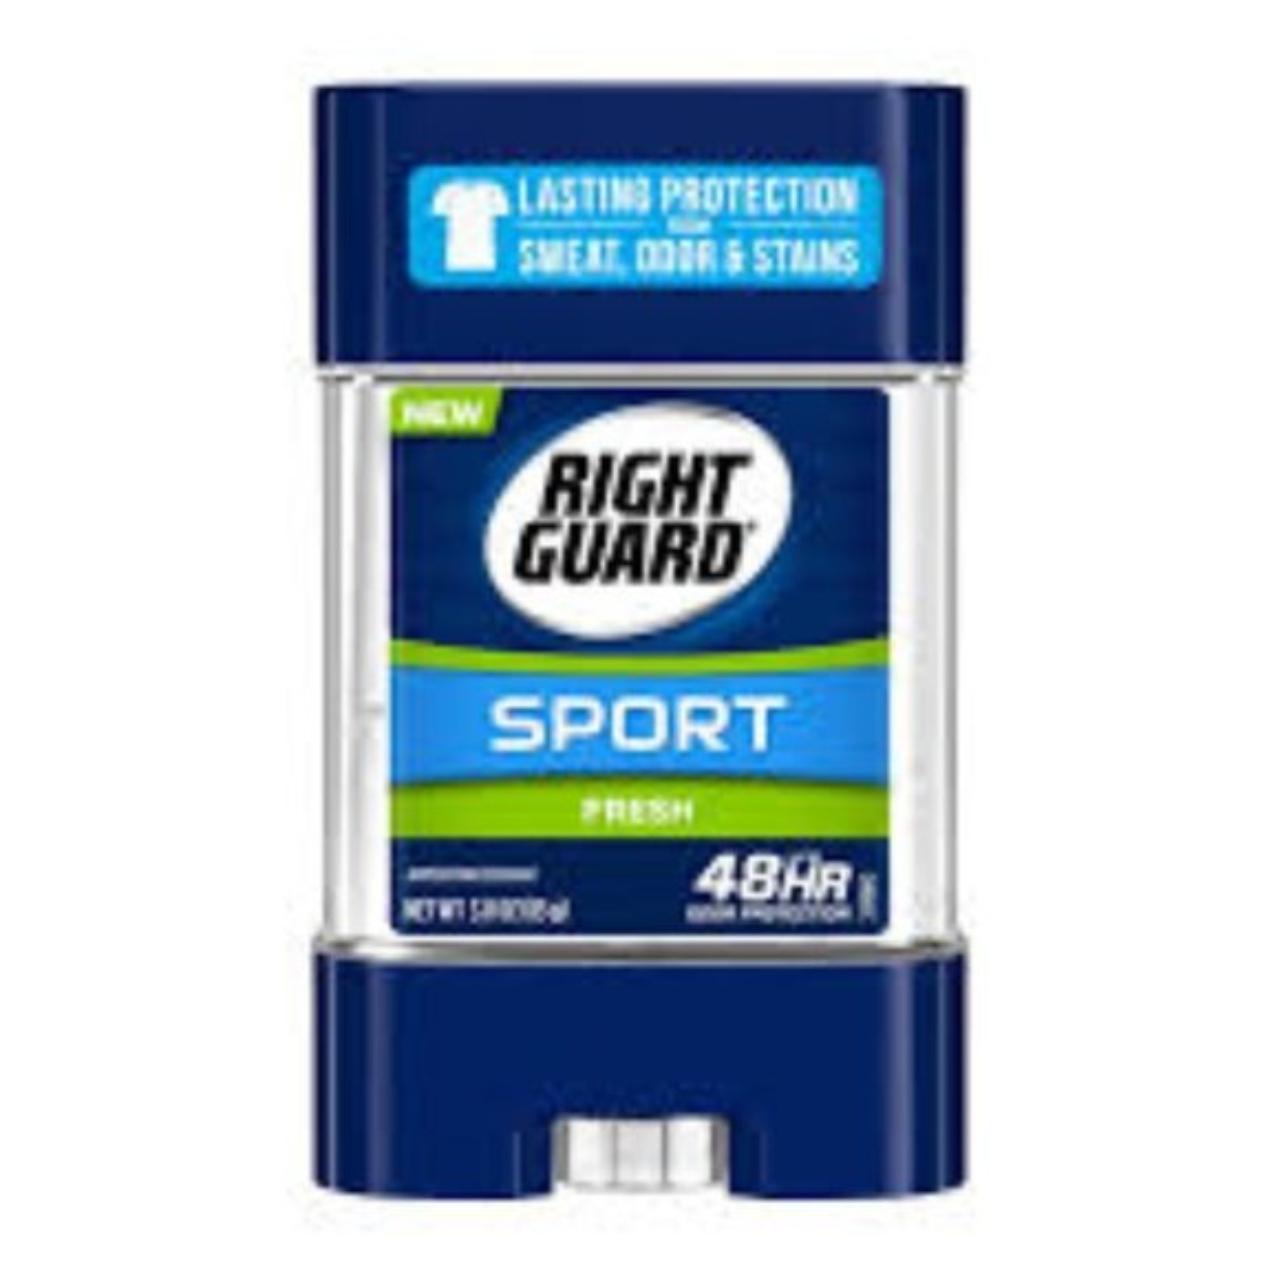 Product Image 2 - Right Guard Sport Fresh Deodorant